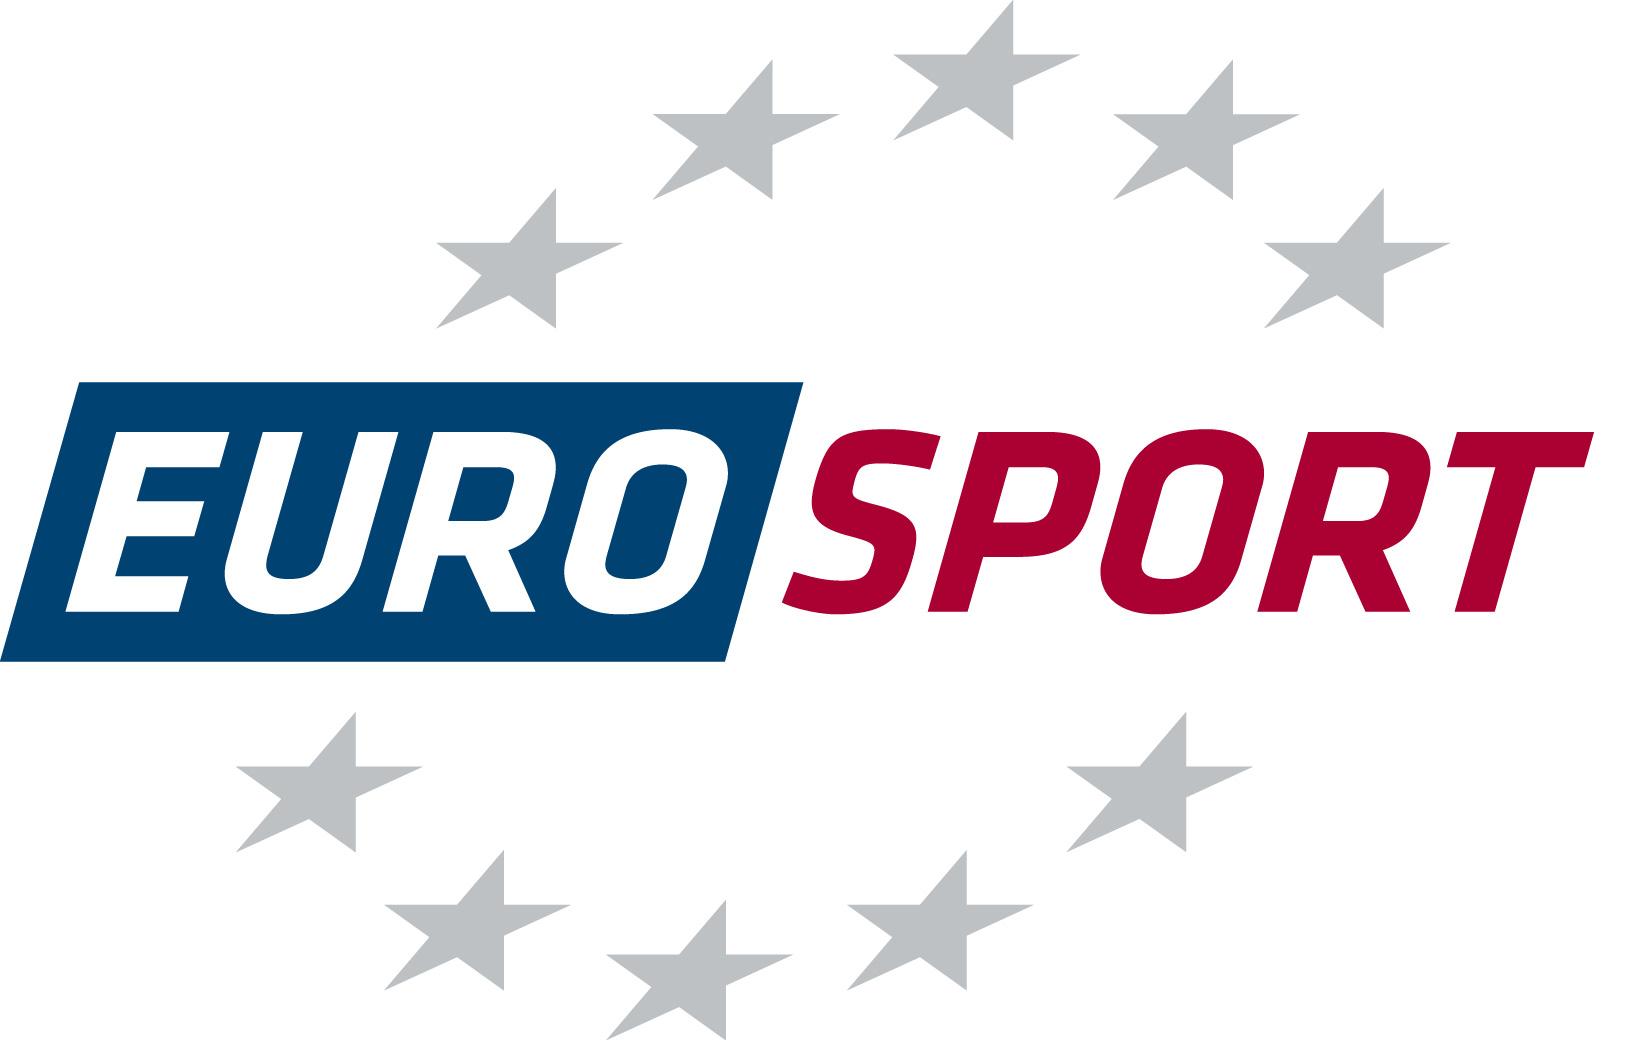 Eurosport Logo
(c) Eurosport